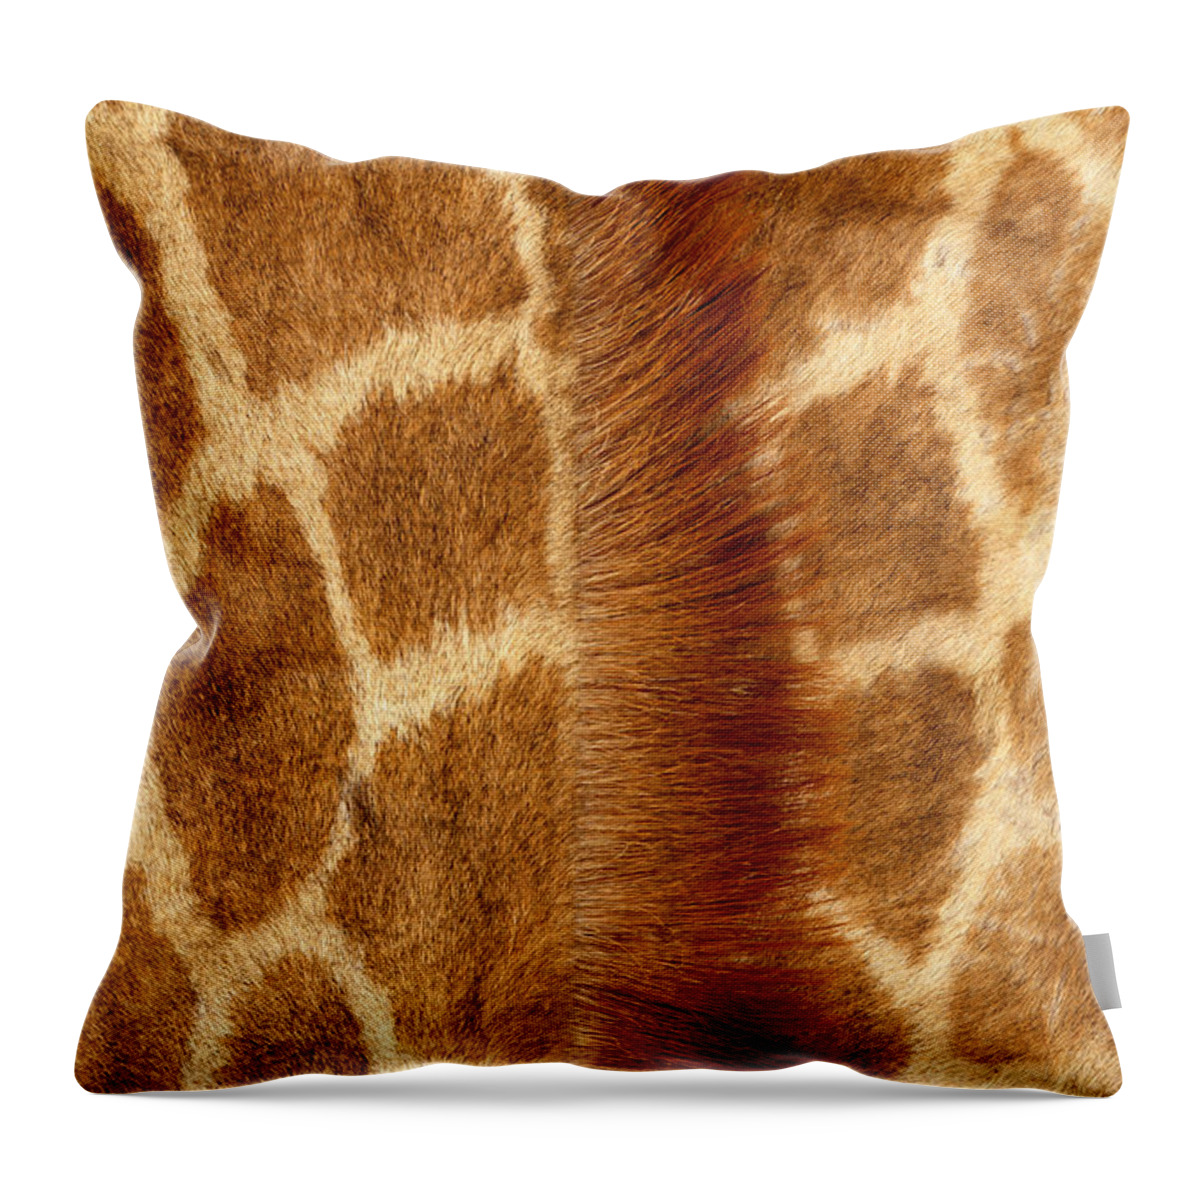 Animal Themes Throw Pillow featuring the photograph Giraffe Fur by Siede Preis